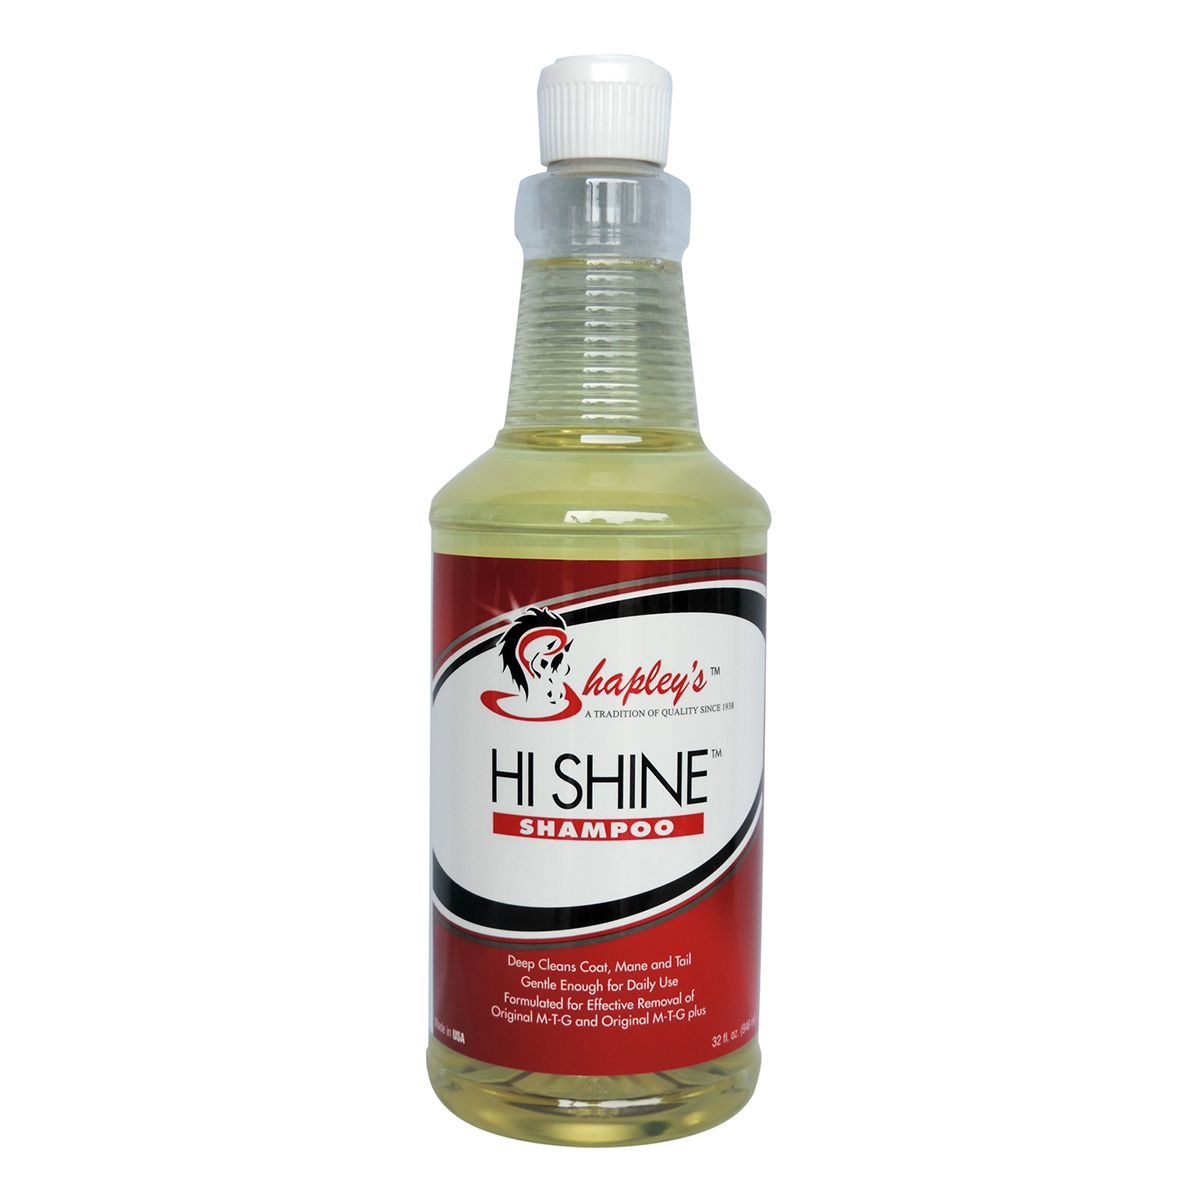 Shapley’s Hi Shine Shampoo